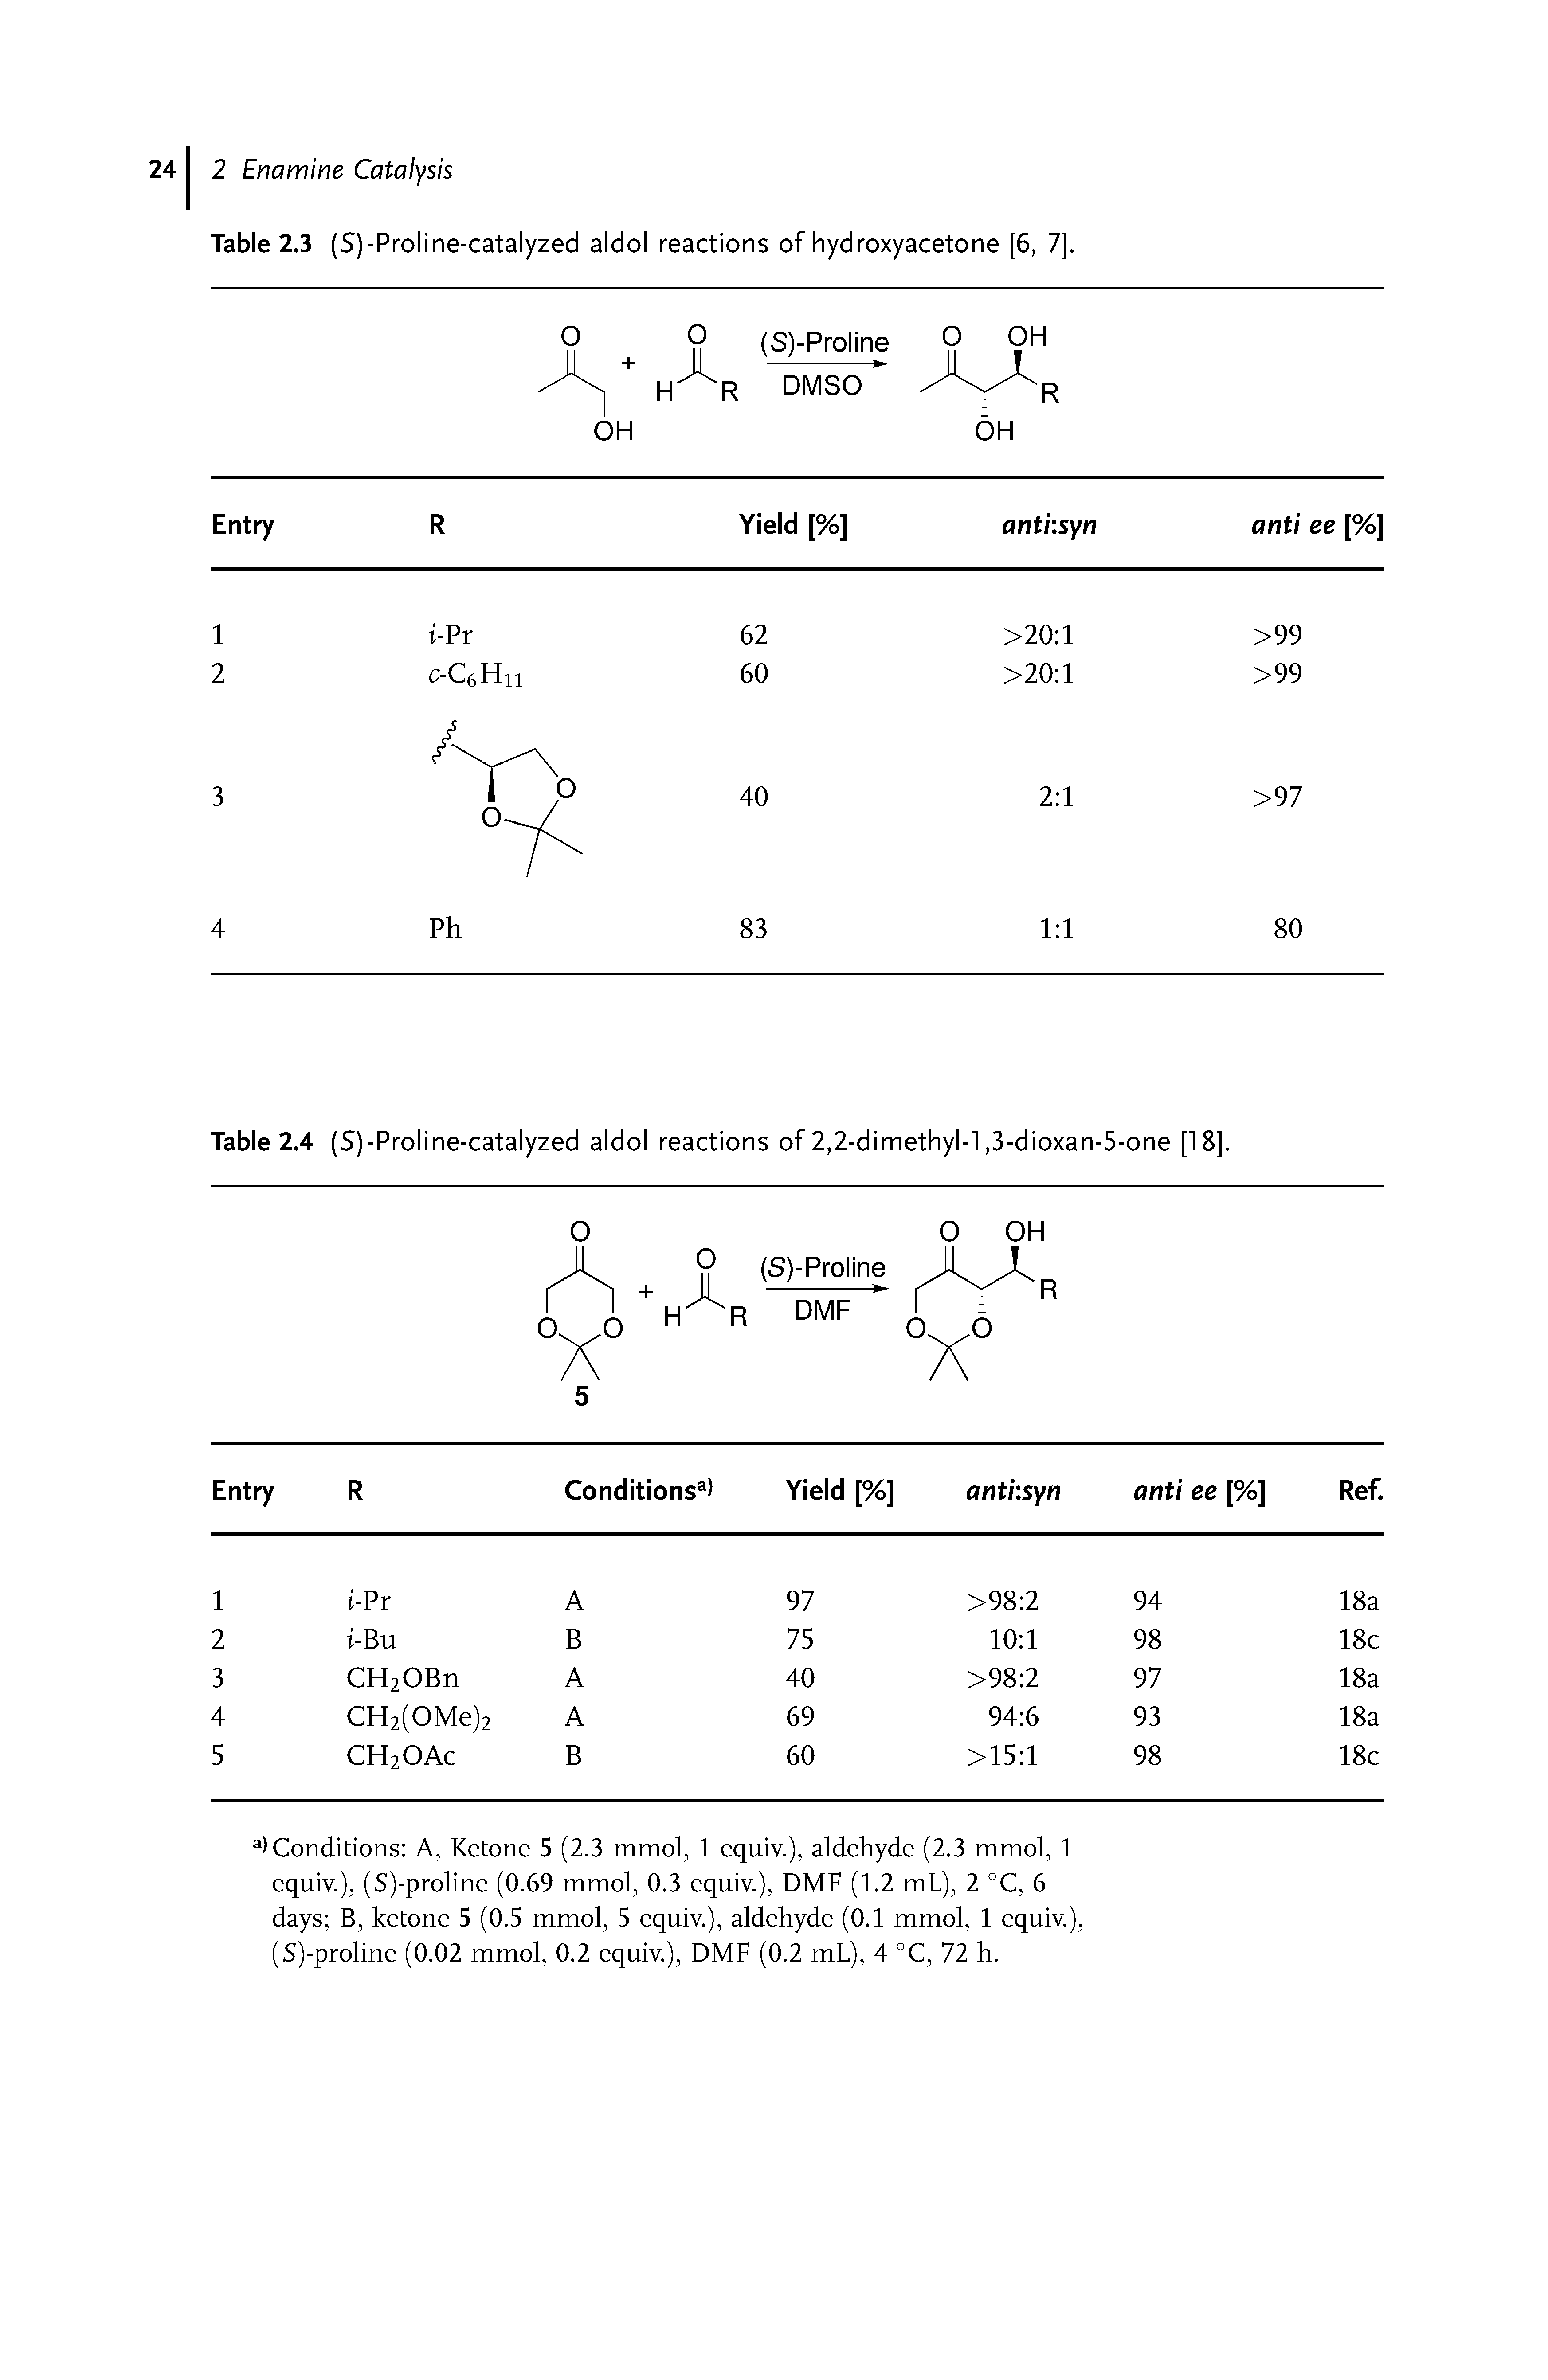 Table 2.3 (S)-Proline-catalyzed aldol reactions of hydroxyacetone [6, 7].